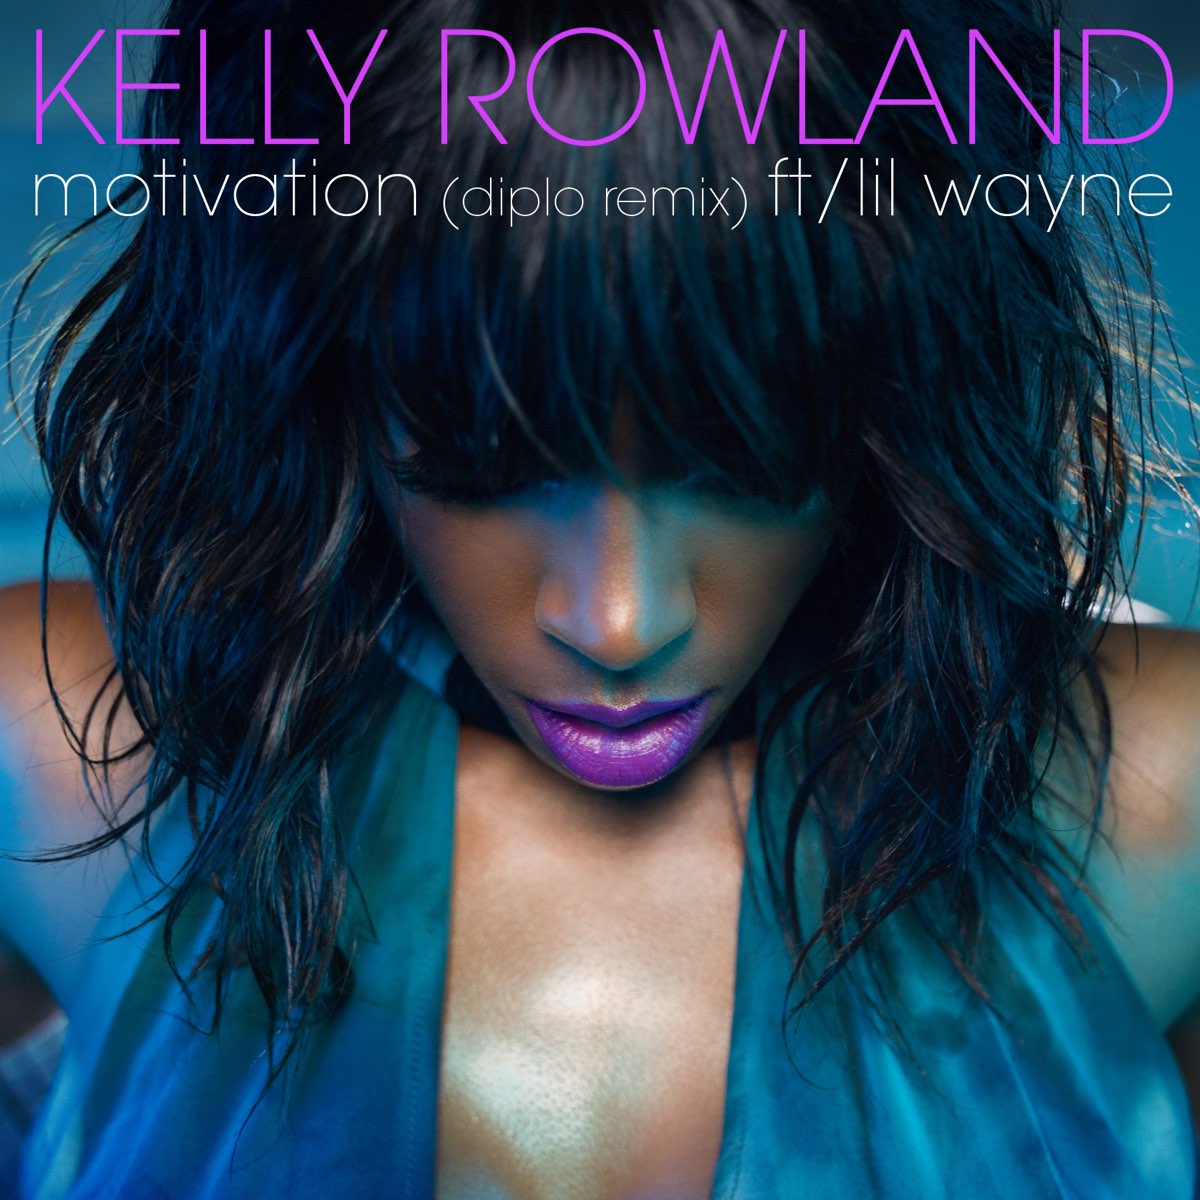 Lil Wayne) [Diplo Remix] - Single, Kelly Rowland, музыка, синглы, песни, R&...